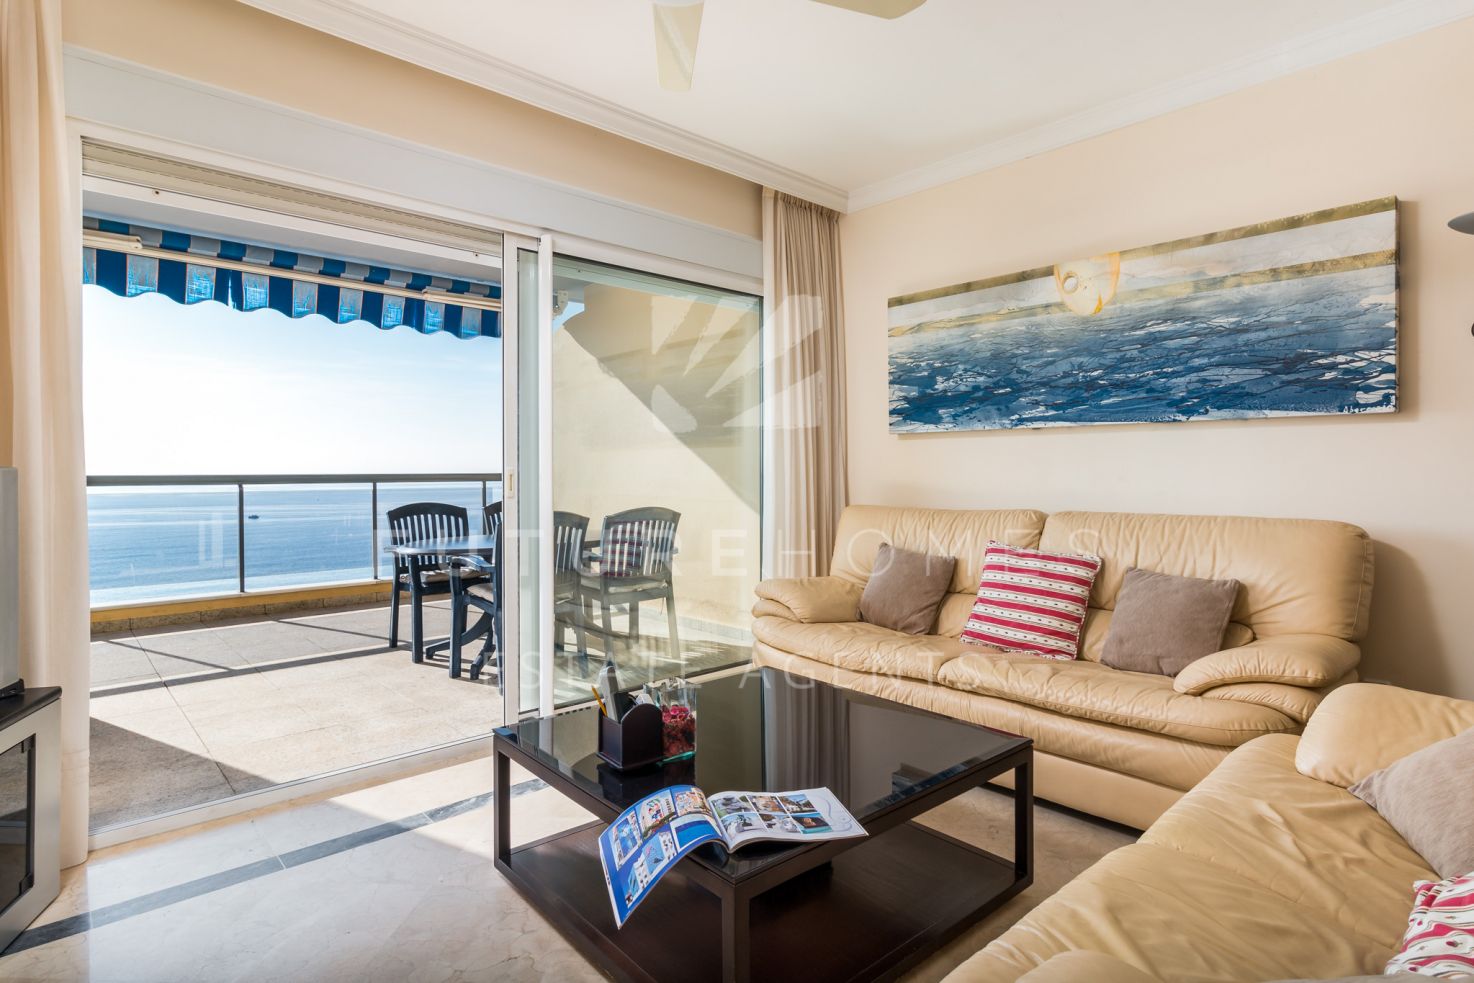 ABSOLUTE FRONTLINE BEACH - 3 bedroom apartment in the prestigious El Coral urbanisation near Estepona port!